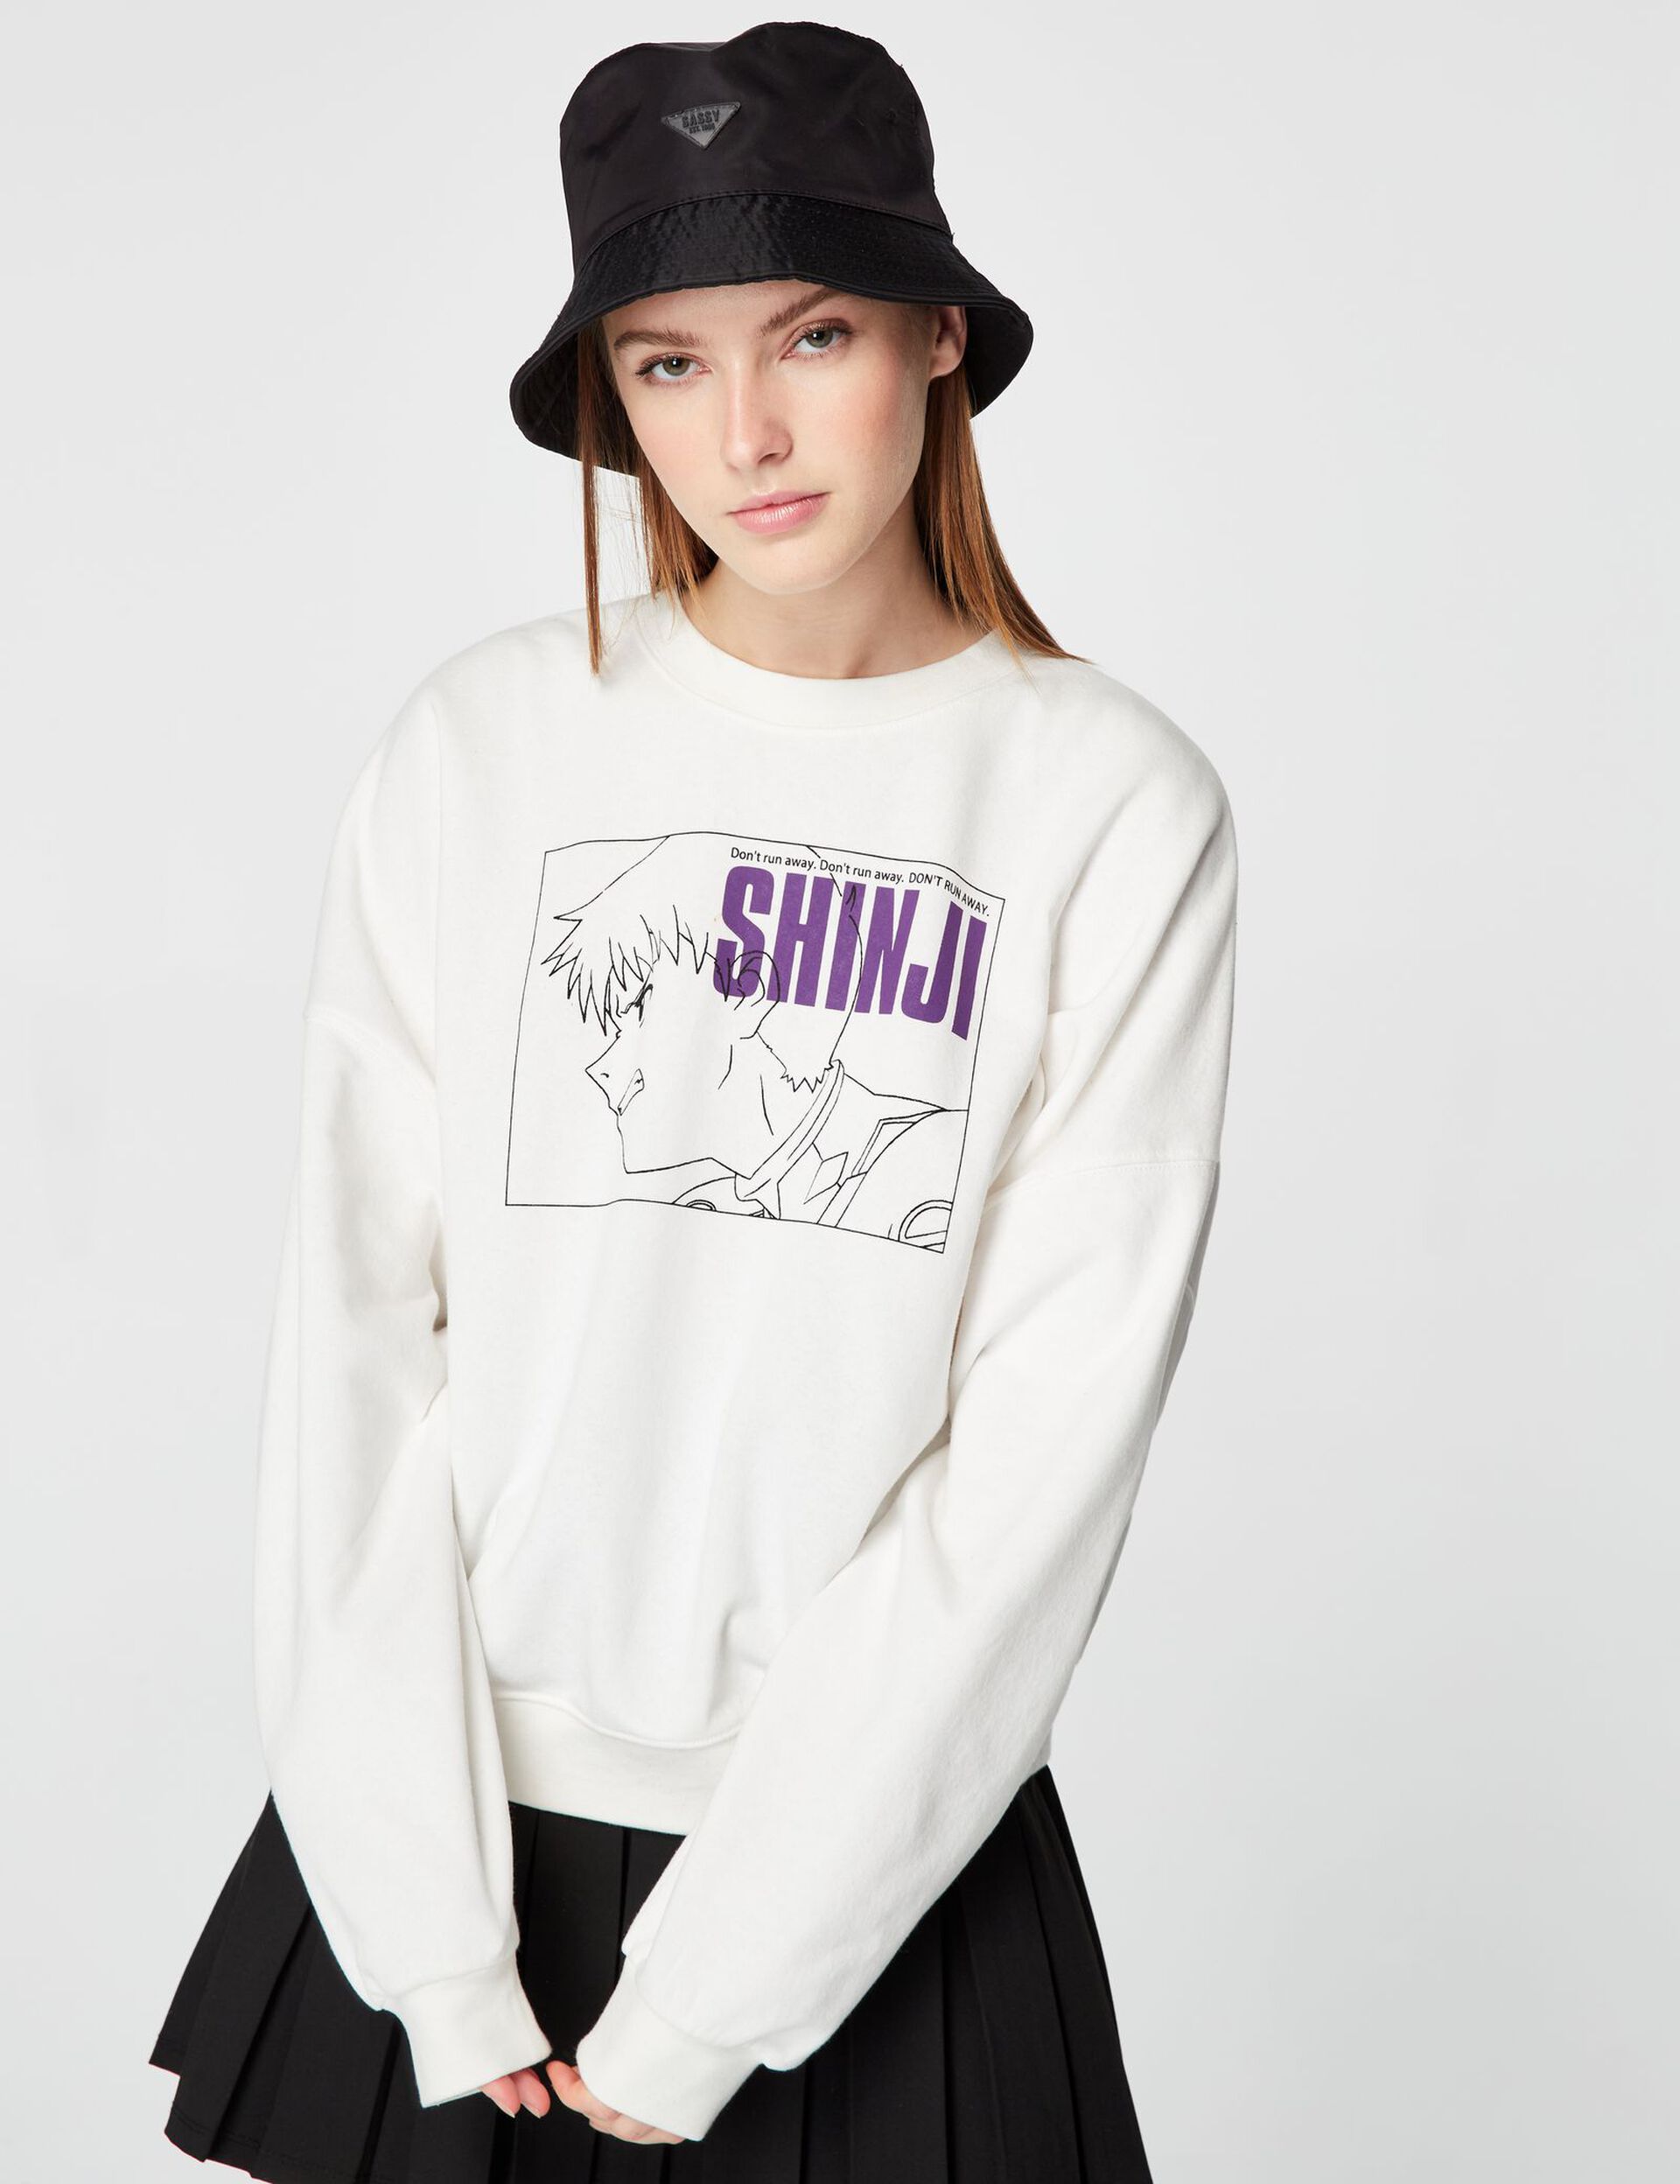 Evangelion Shinji sweatshirt